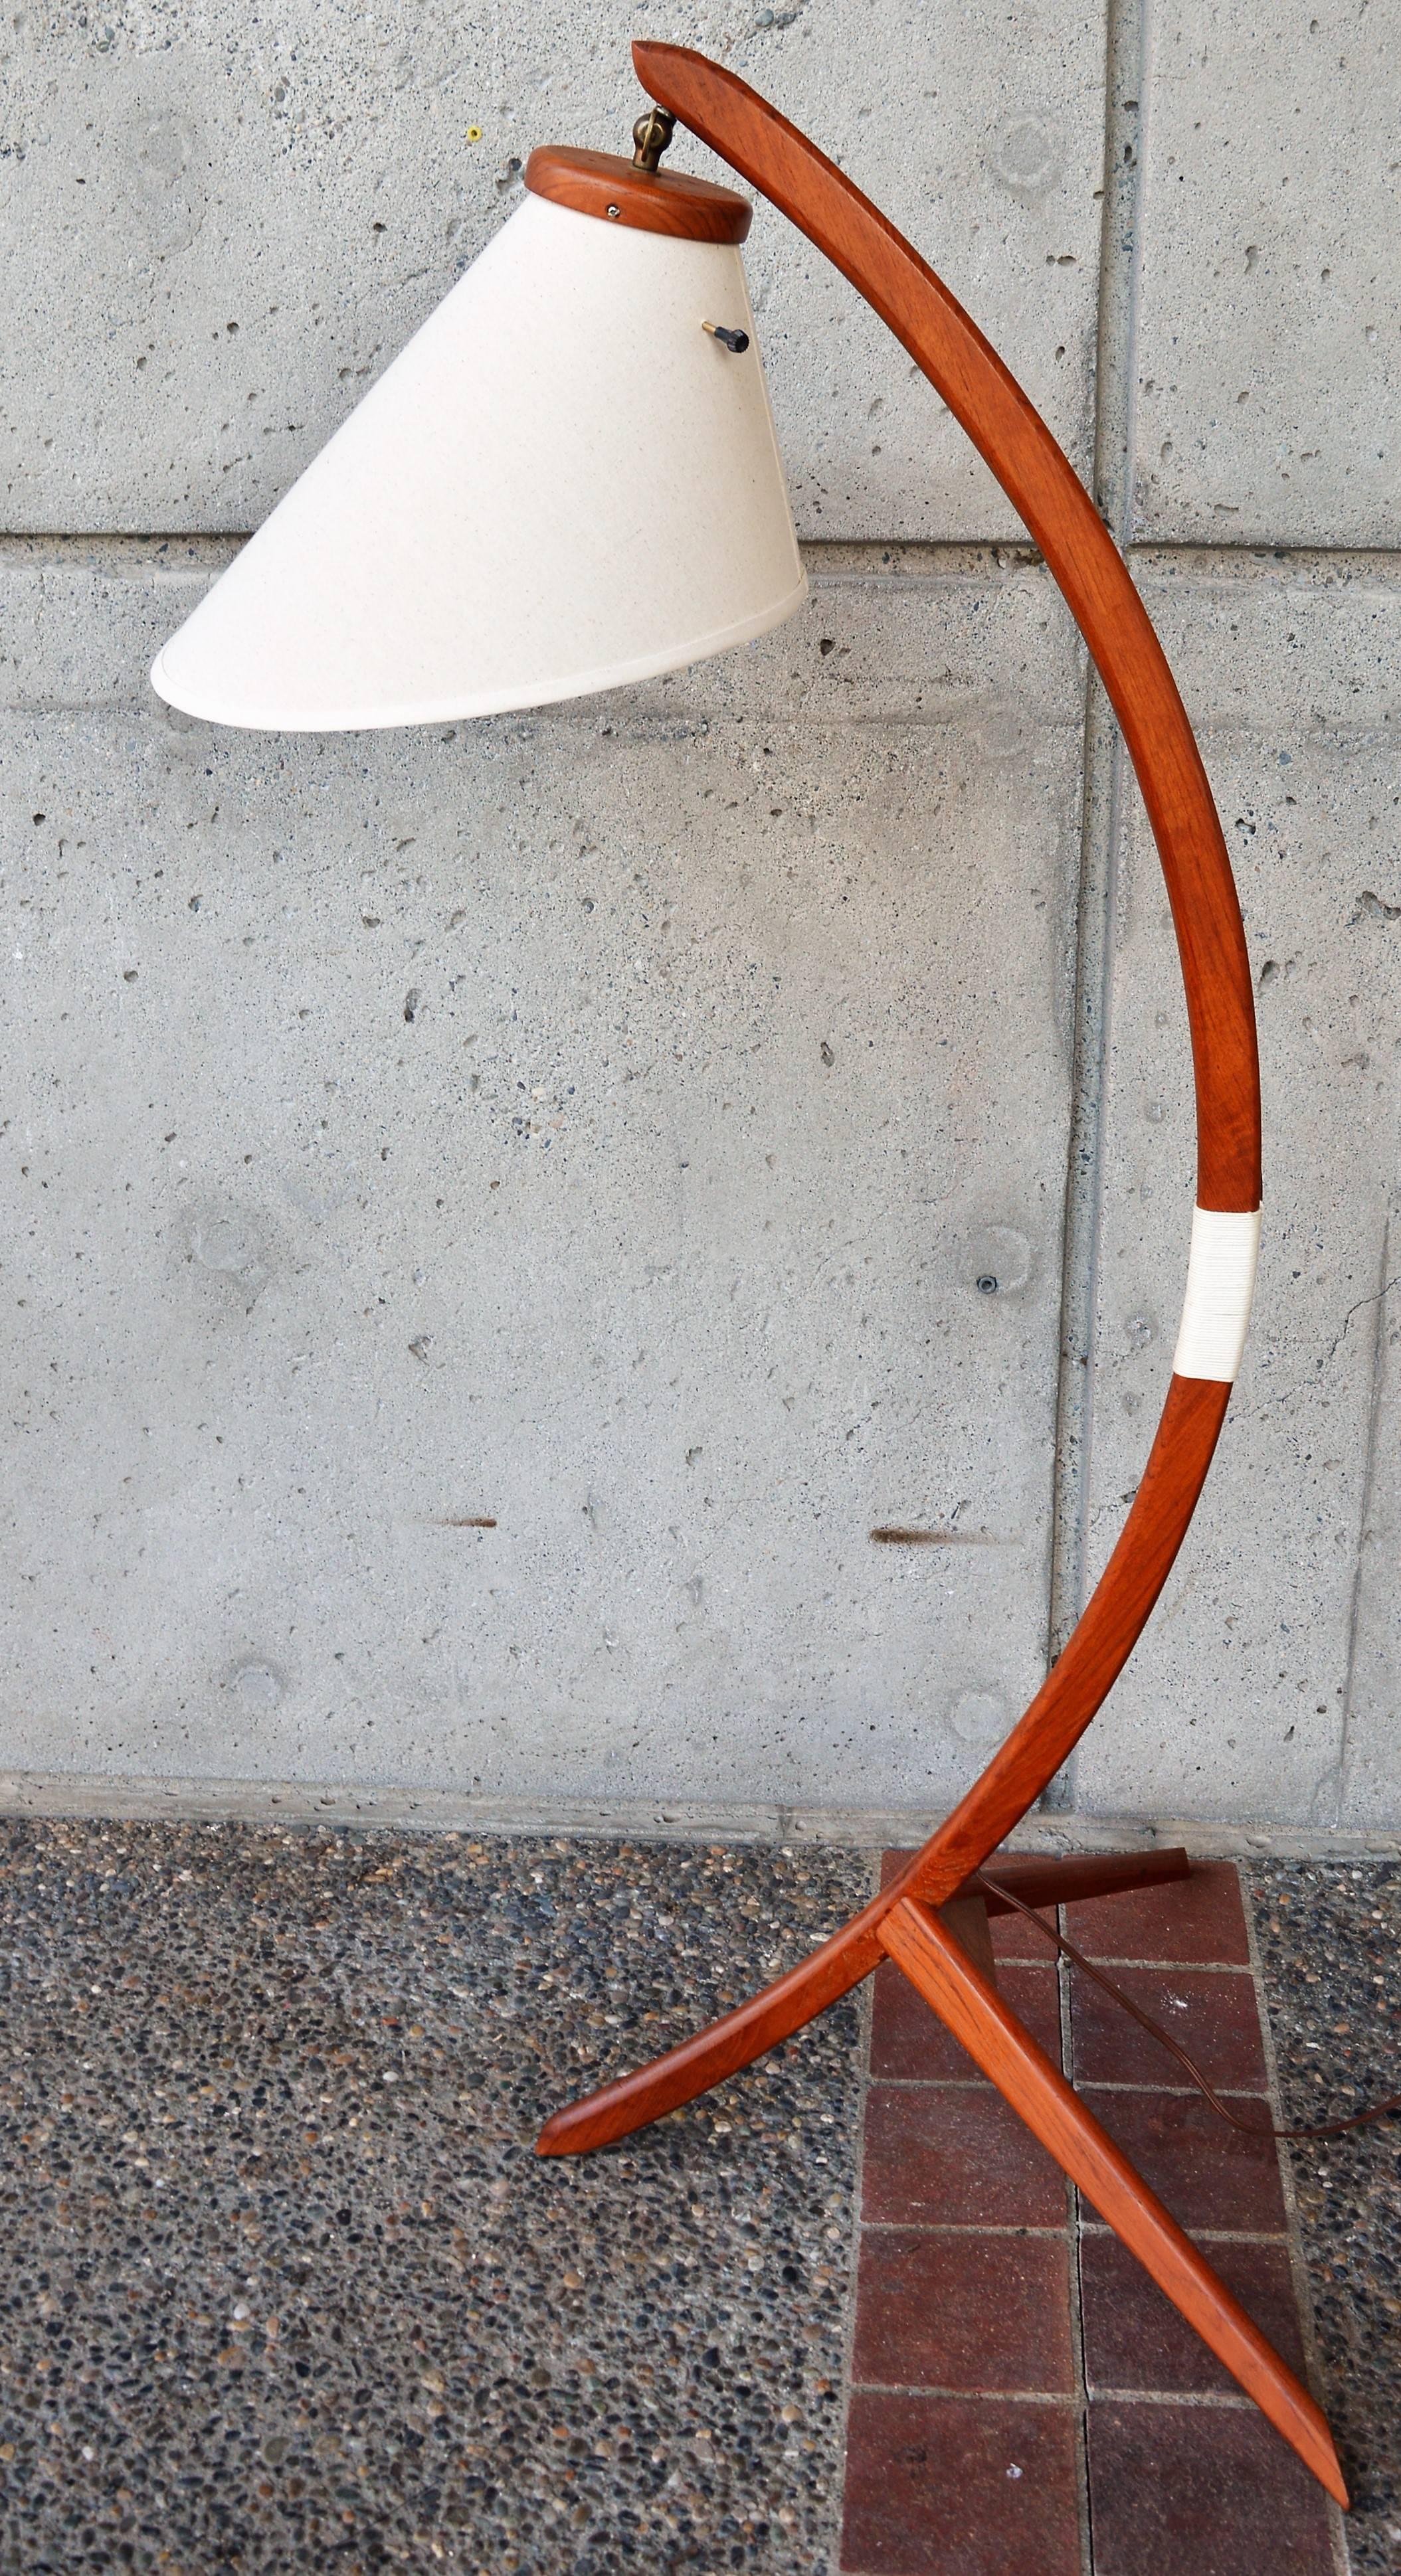 Mid-Century Modern Danish Teak Arc or Bow Tripod Floor Lamp with New Bonnet Shade, Rispal Style